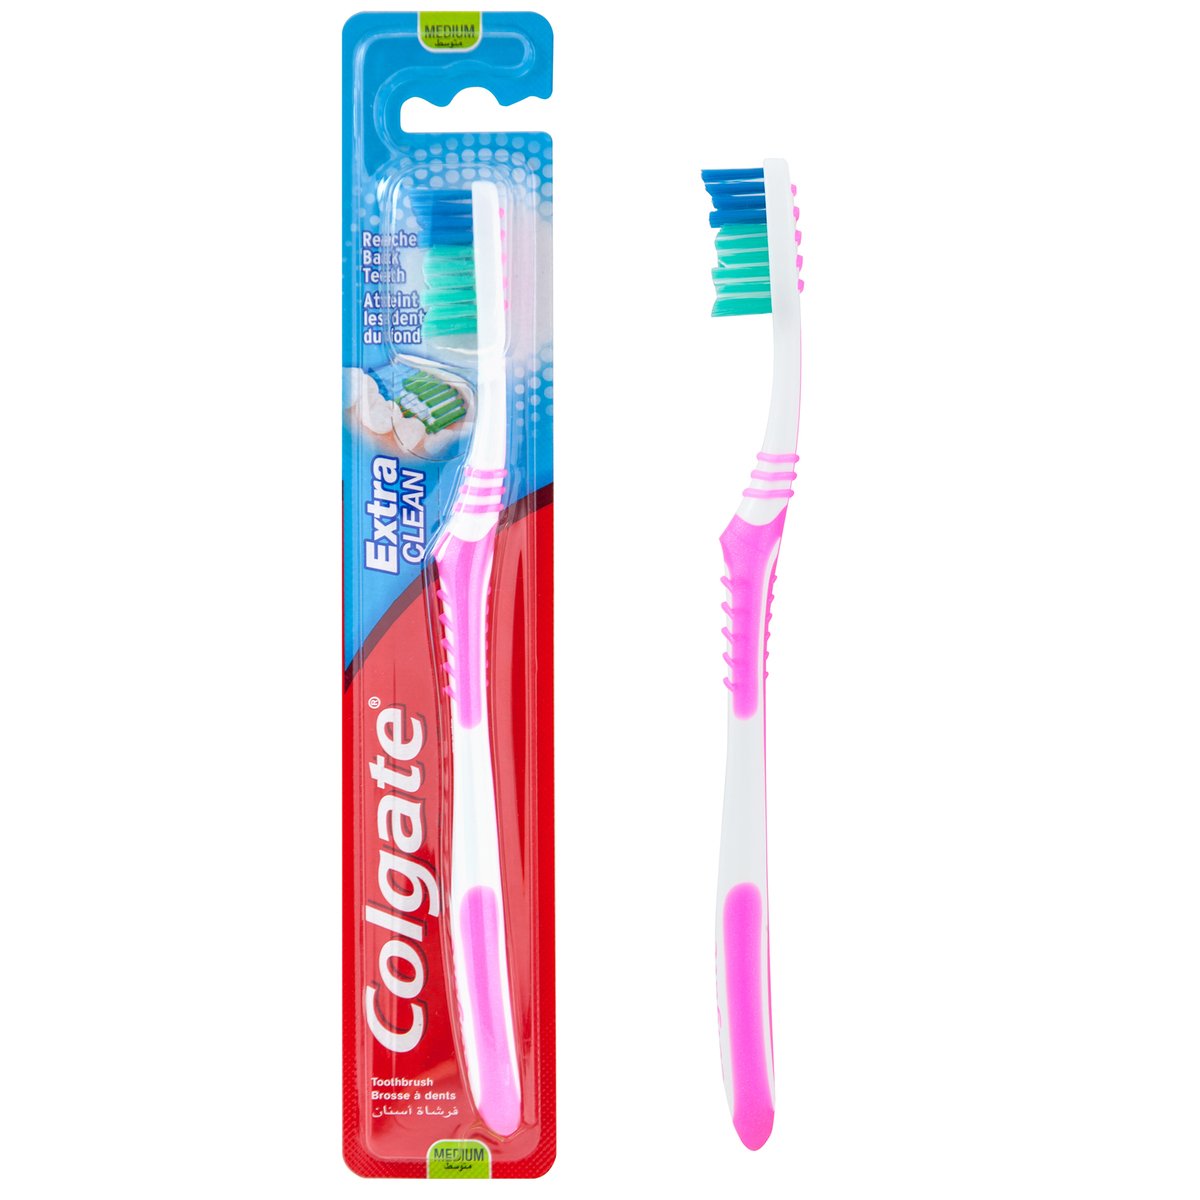 Colgate Toothbrush Extra Clean Medium Assorted Colour 1pc